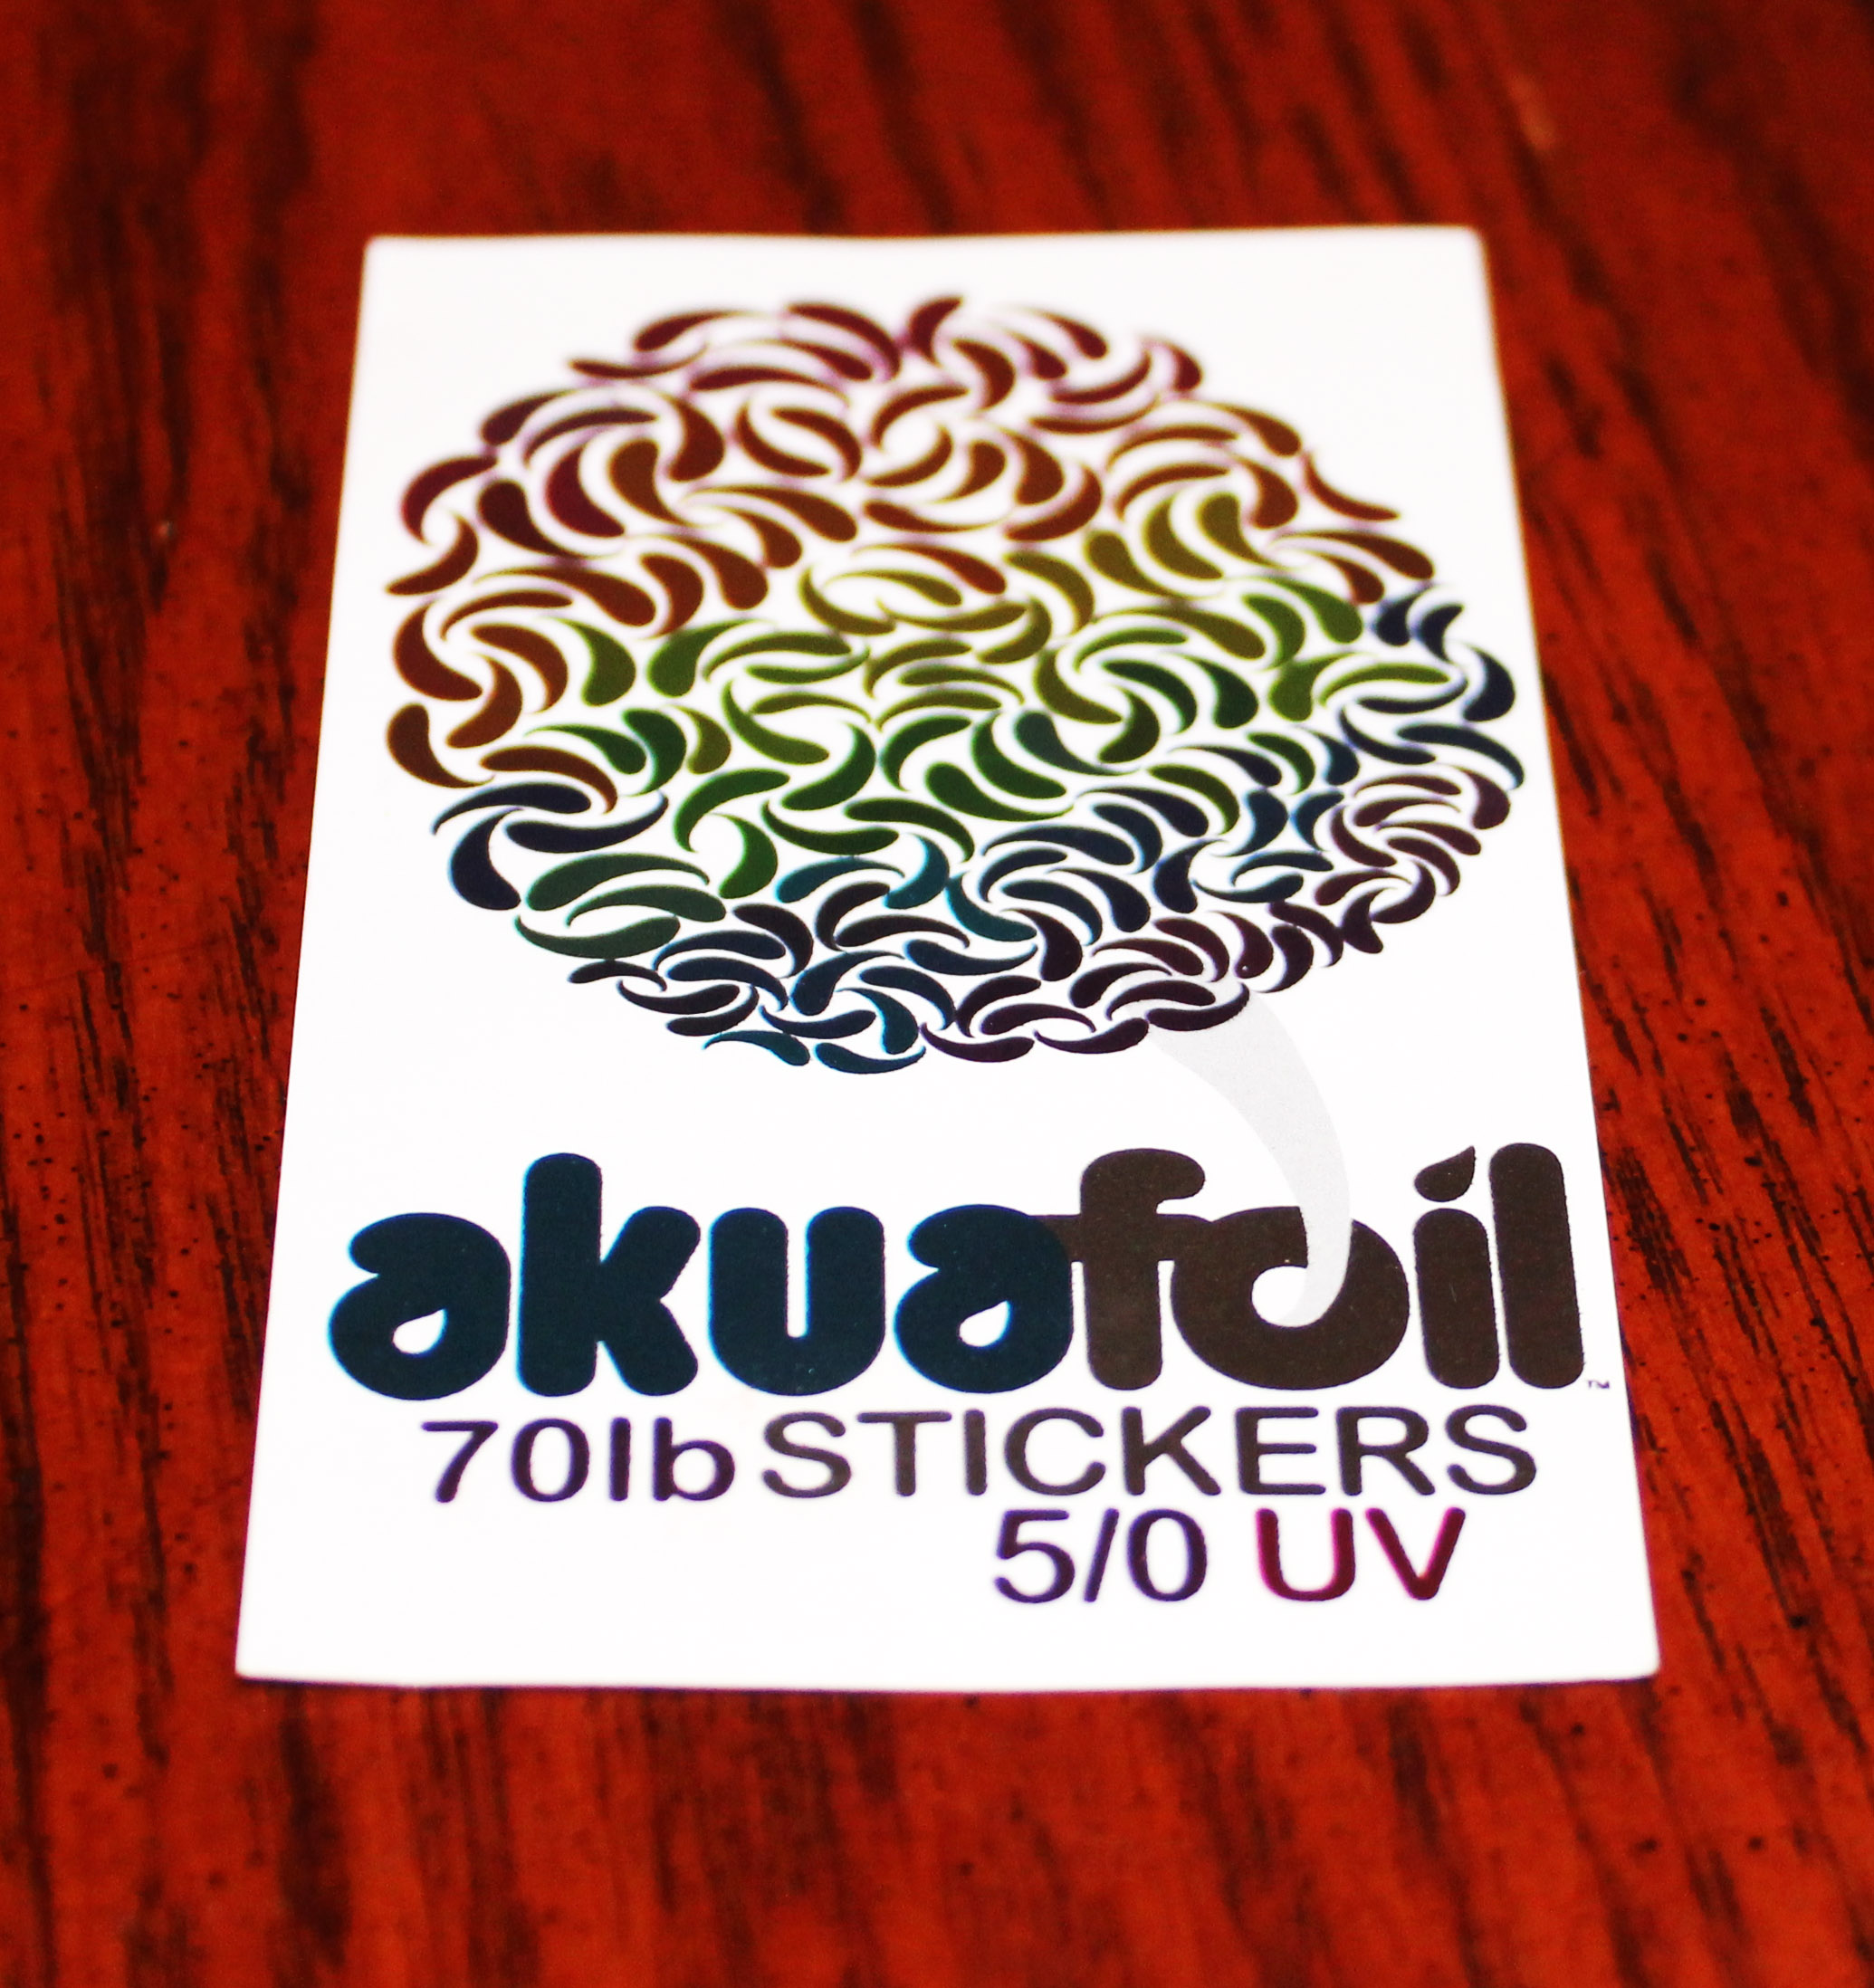 70 Stickers-Akuafoil-UV